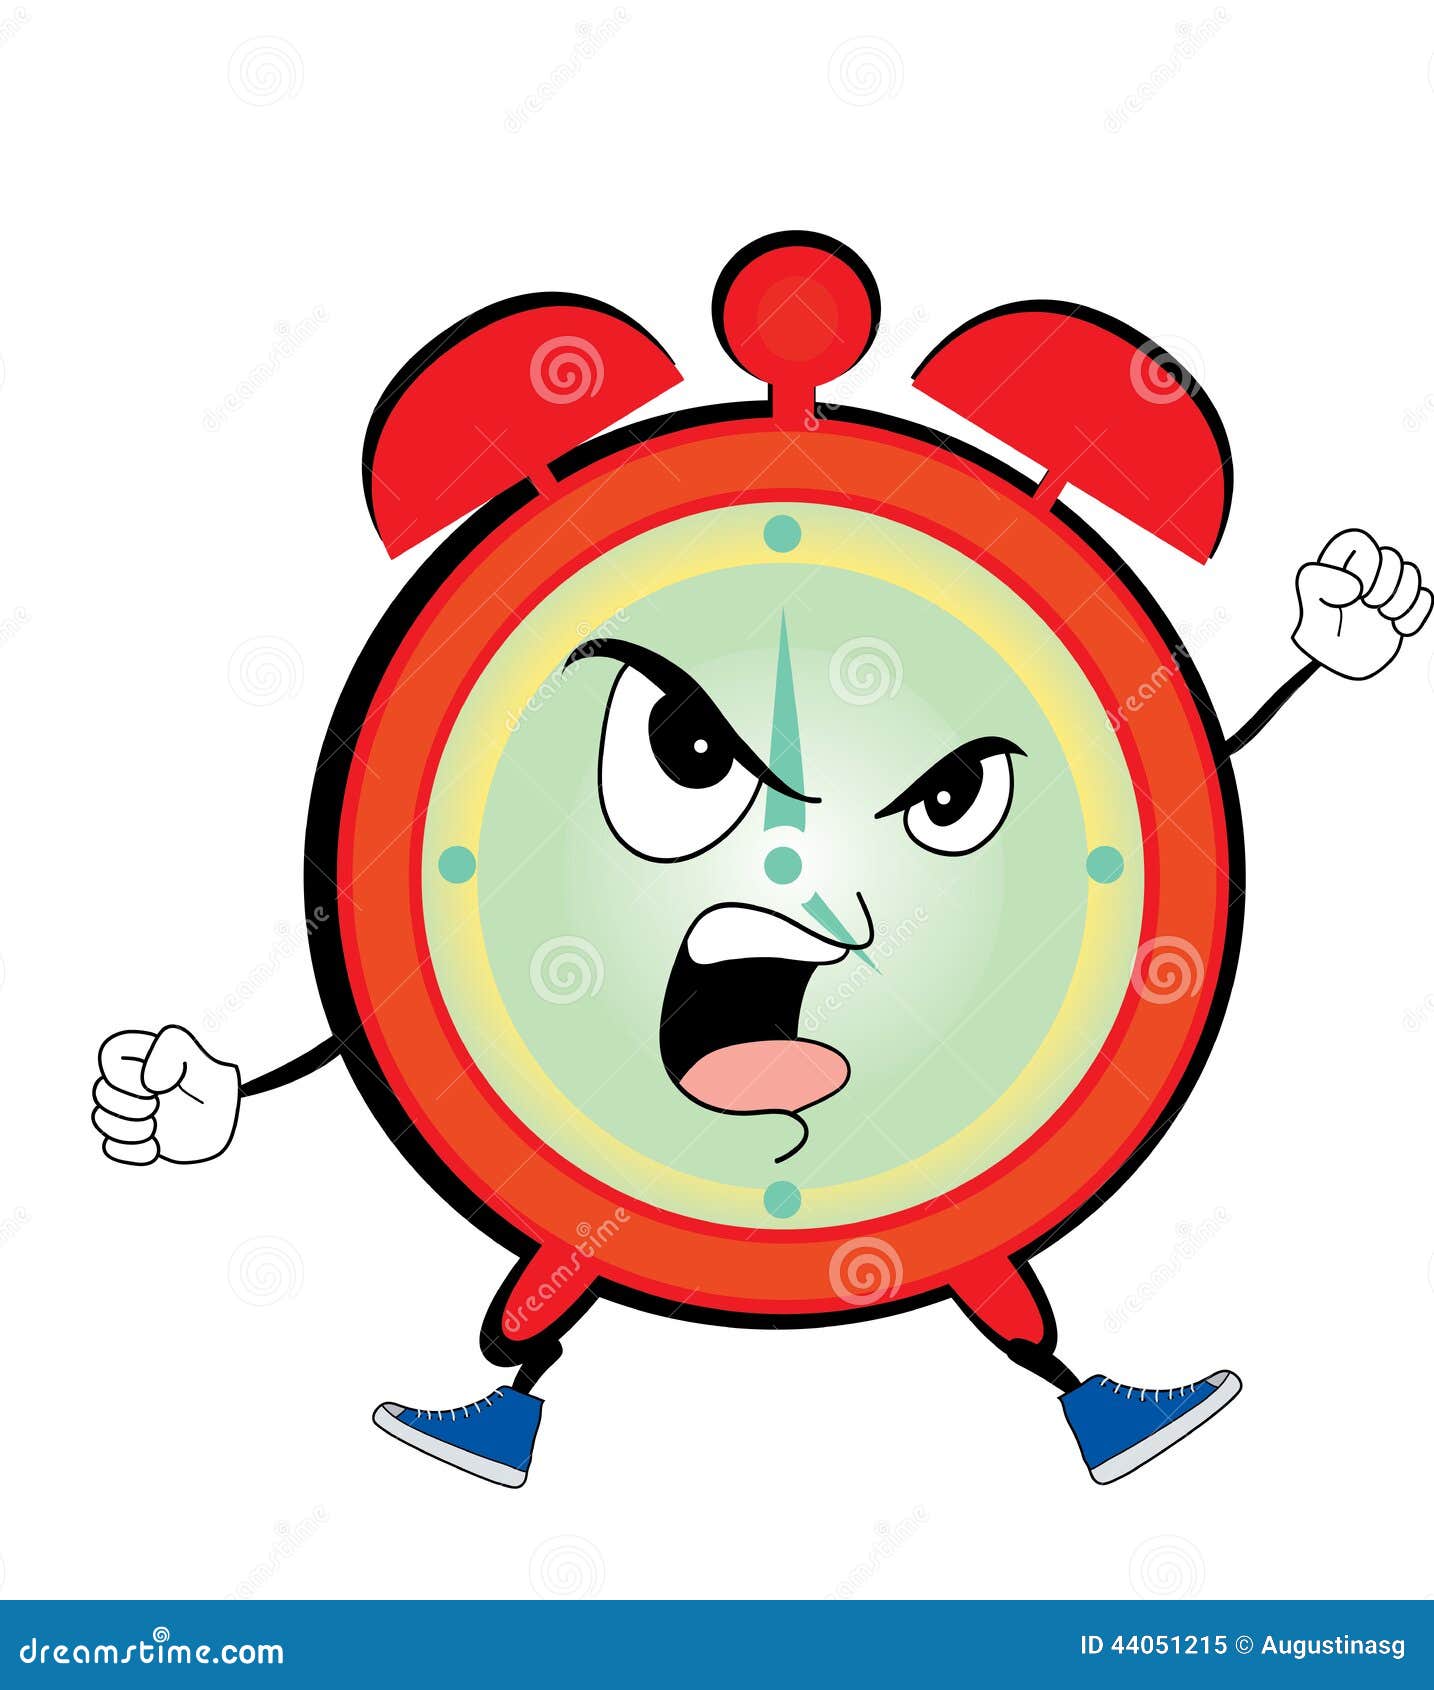 Angry Alarm Clock Cartoon Illustration 44051215 - Megapixl